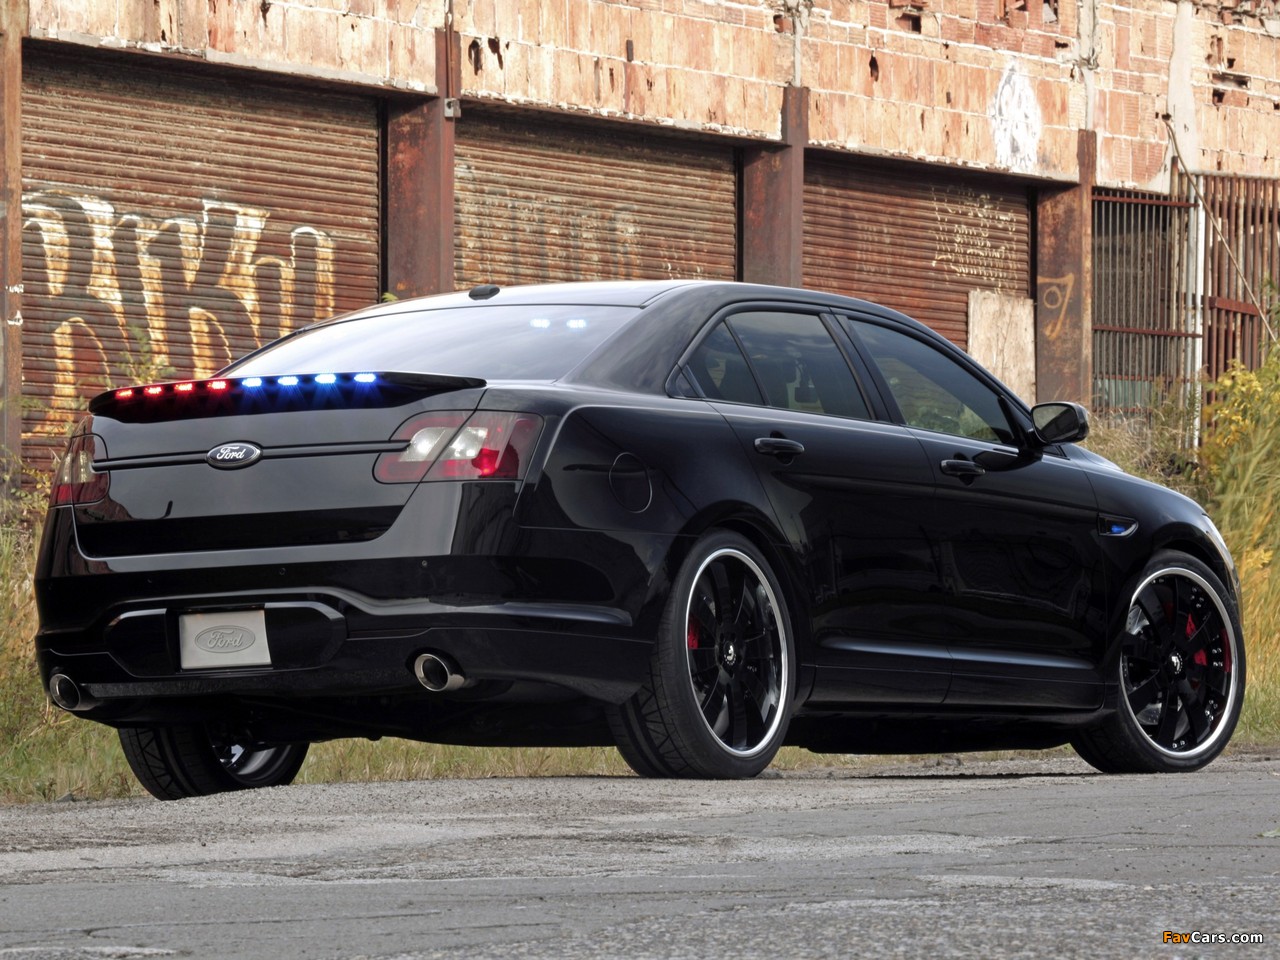 Stealth Ford Police Interceptor Sedan Concept 2010 photos (1280 x 960)